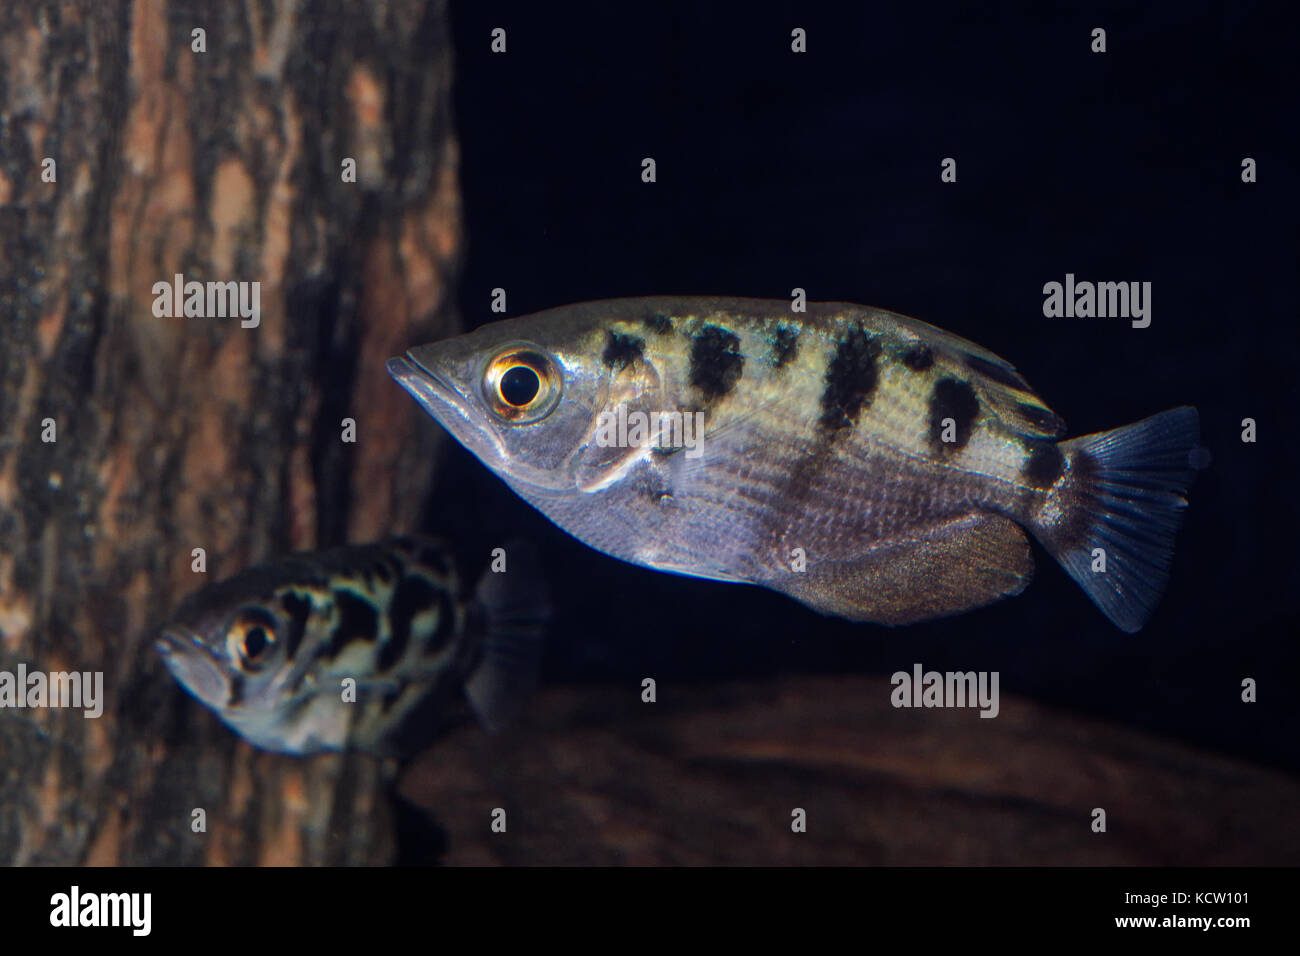 Banded archerfish (Toxotes jaculatrix) in aquarium Stock Photo